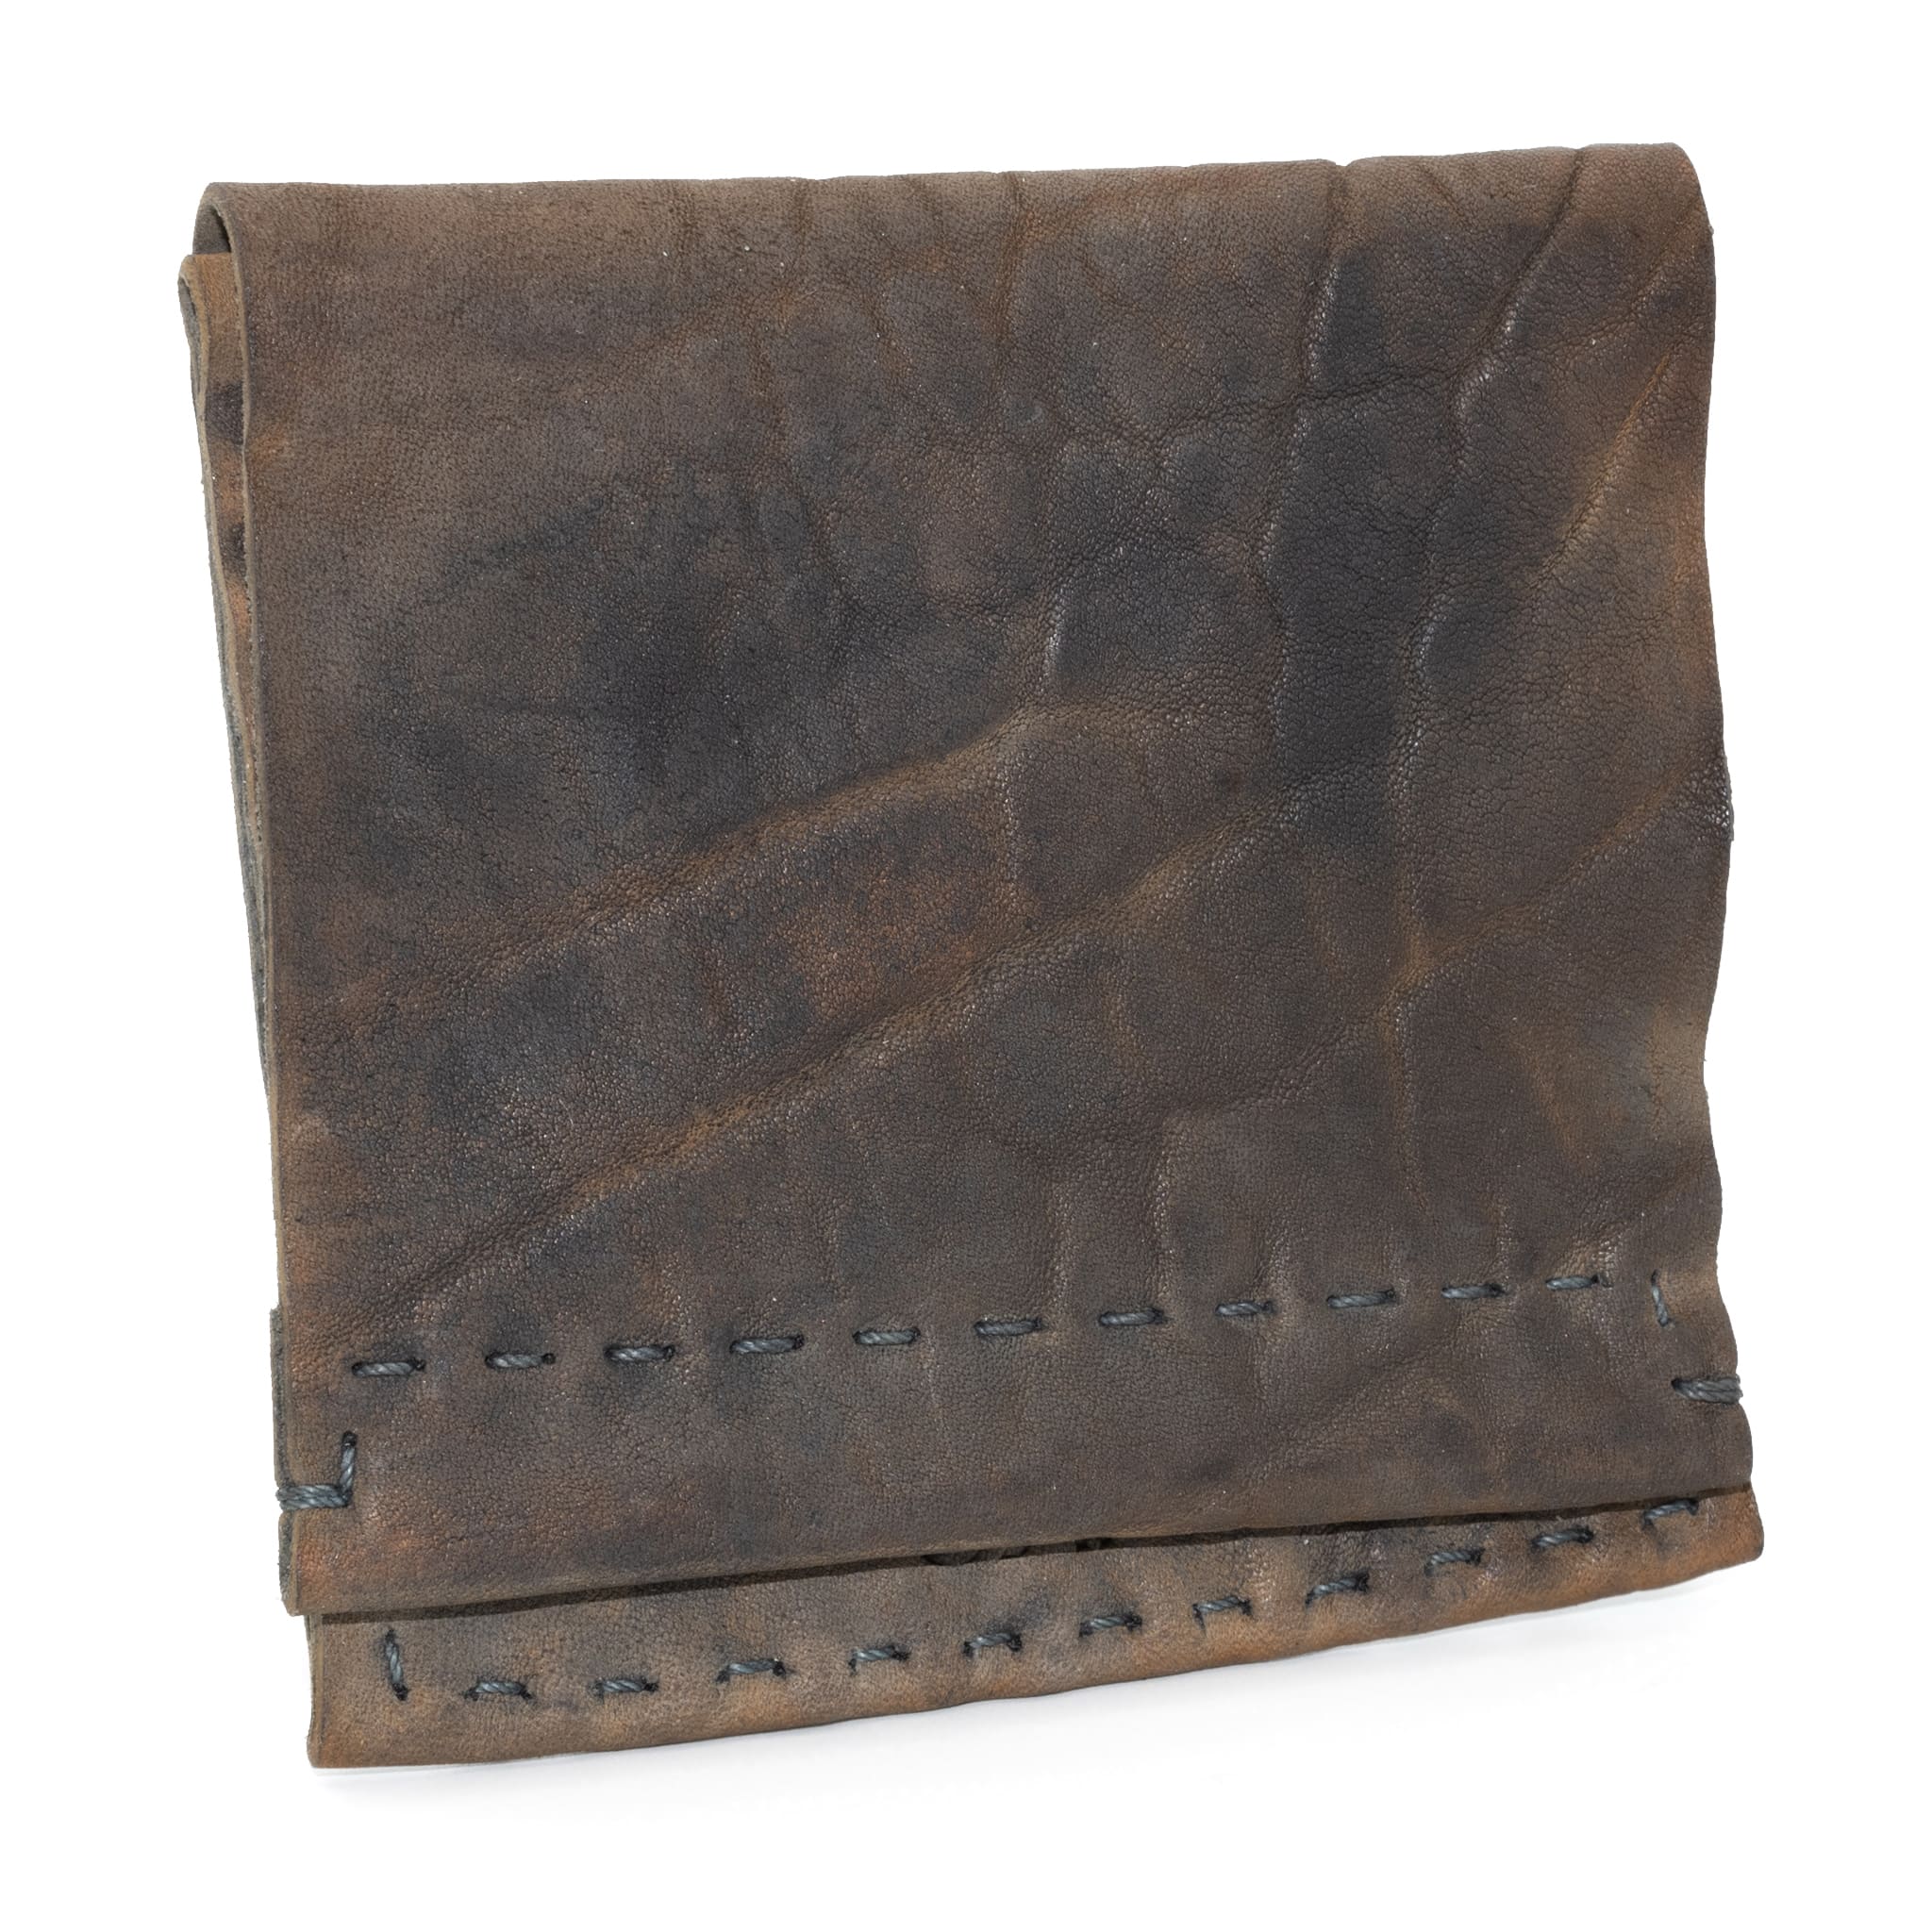 atelier skn | cold dye one piece horse culatta leather bifold wallet 